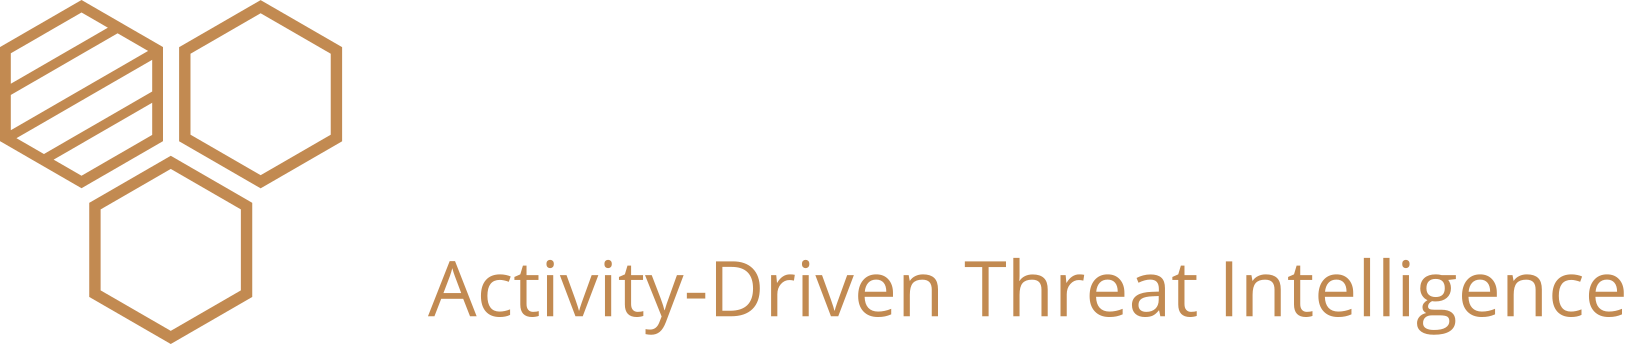 HoneypotDB - Activity-Driven Threat Intelligence